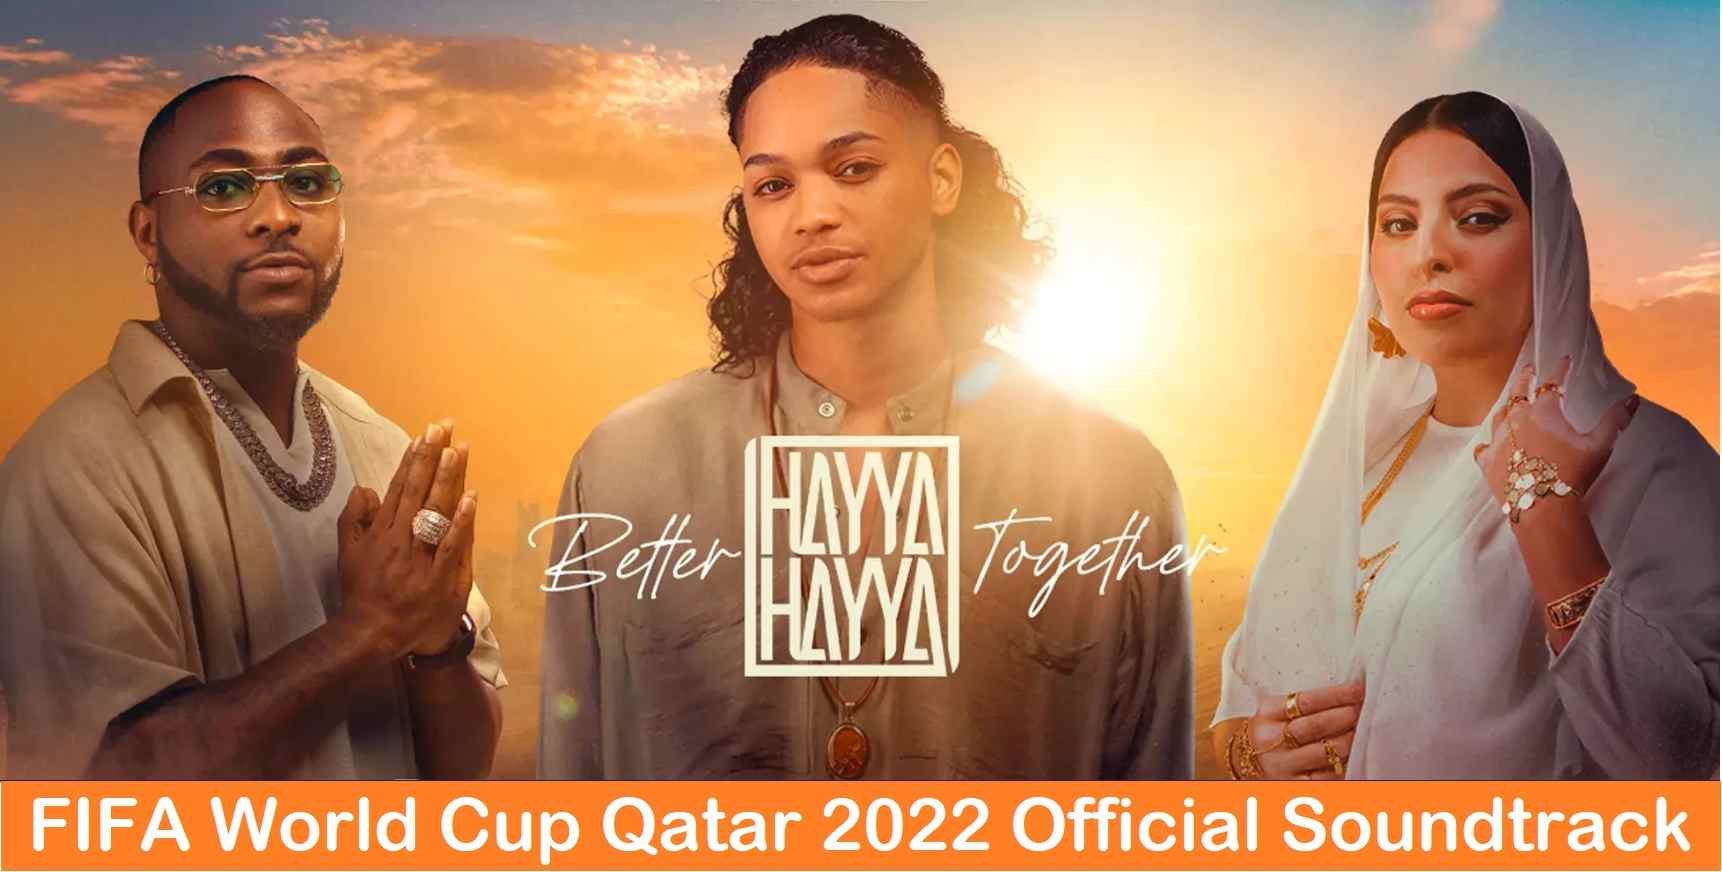 2022 FIFA World Cup Qatar Official Soundtrack Hayya Hayya (Better Together)